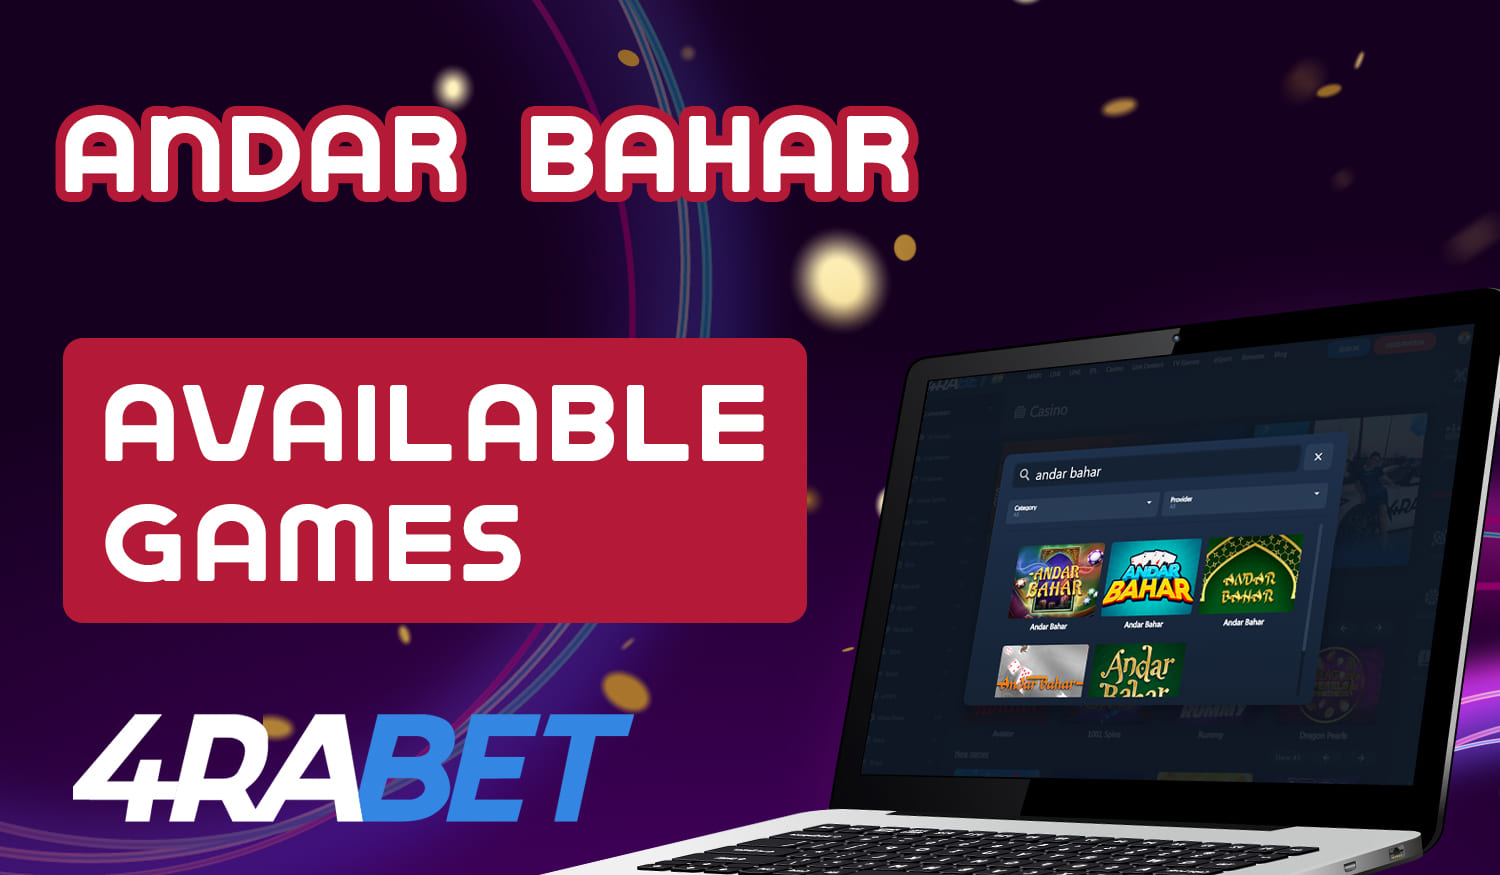 Variety of Andar Bahar games on 4raBet